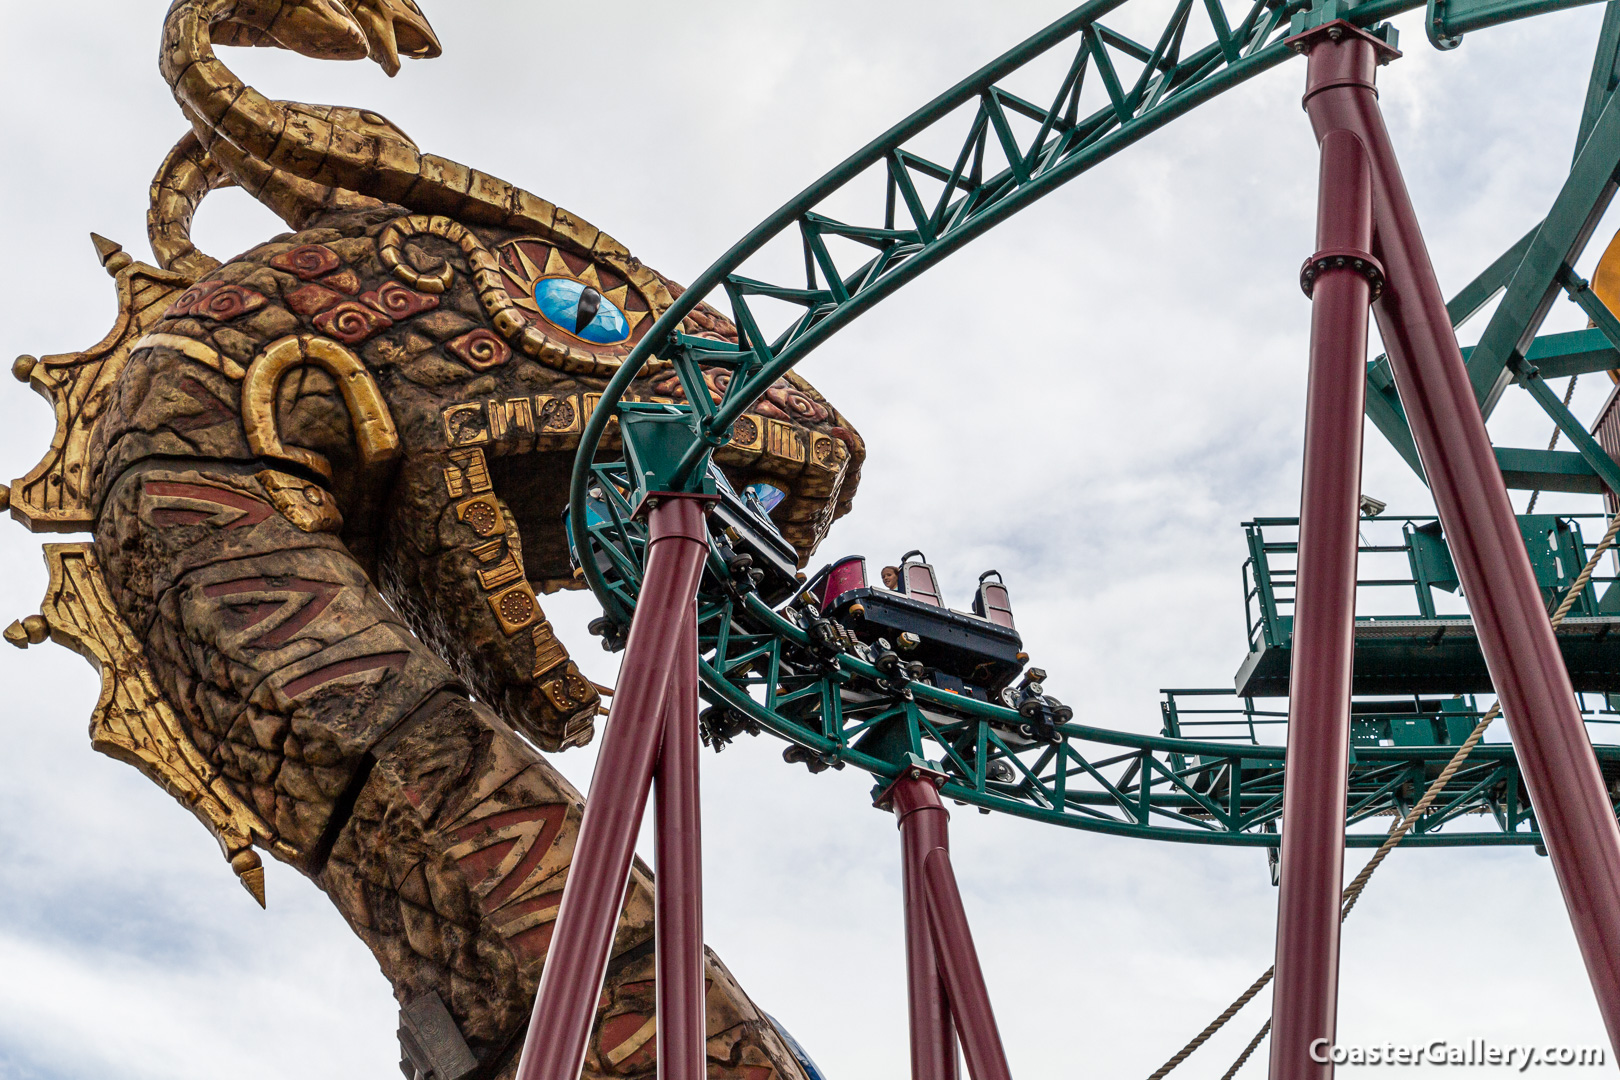 The Snake King statue - Cobra's Curse roller coaster at Busch Gardens